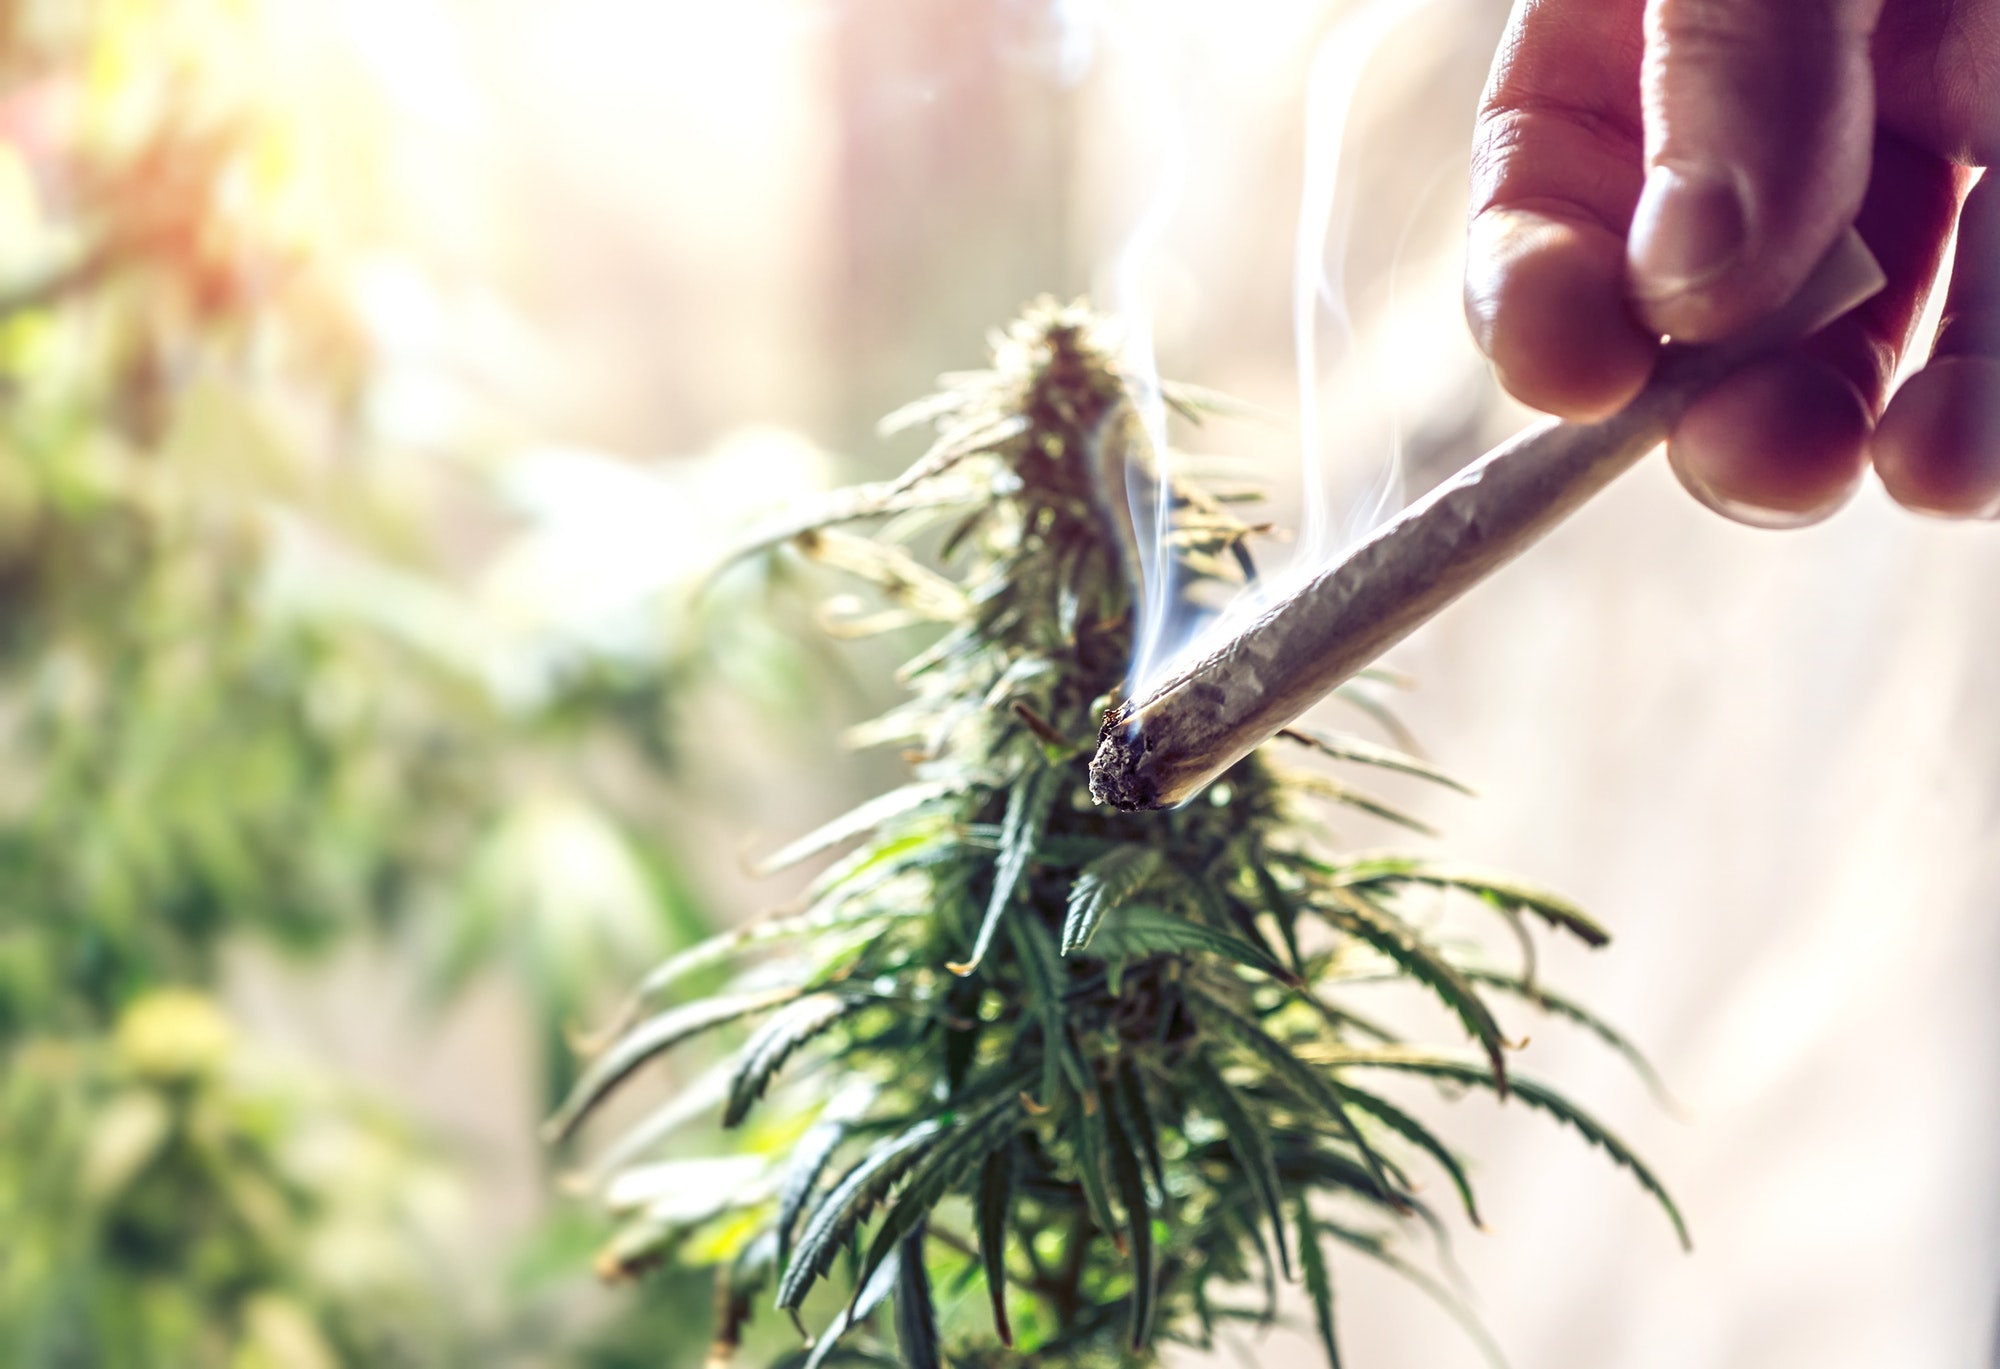 Hand holding Marijuana joint against cannabis plant